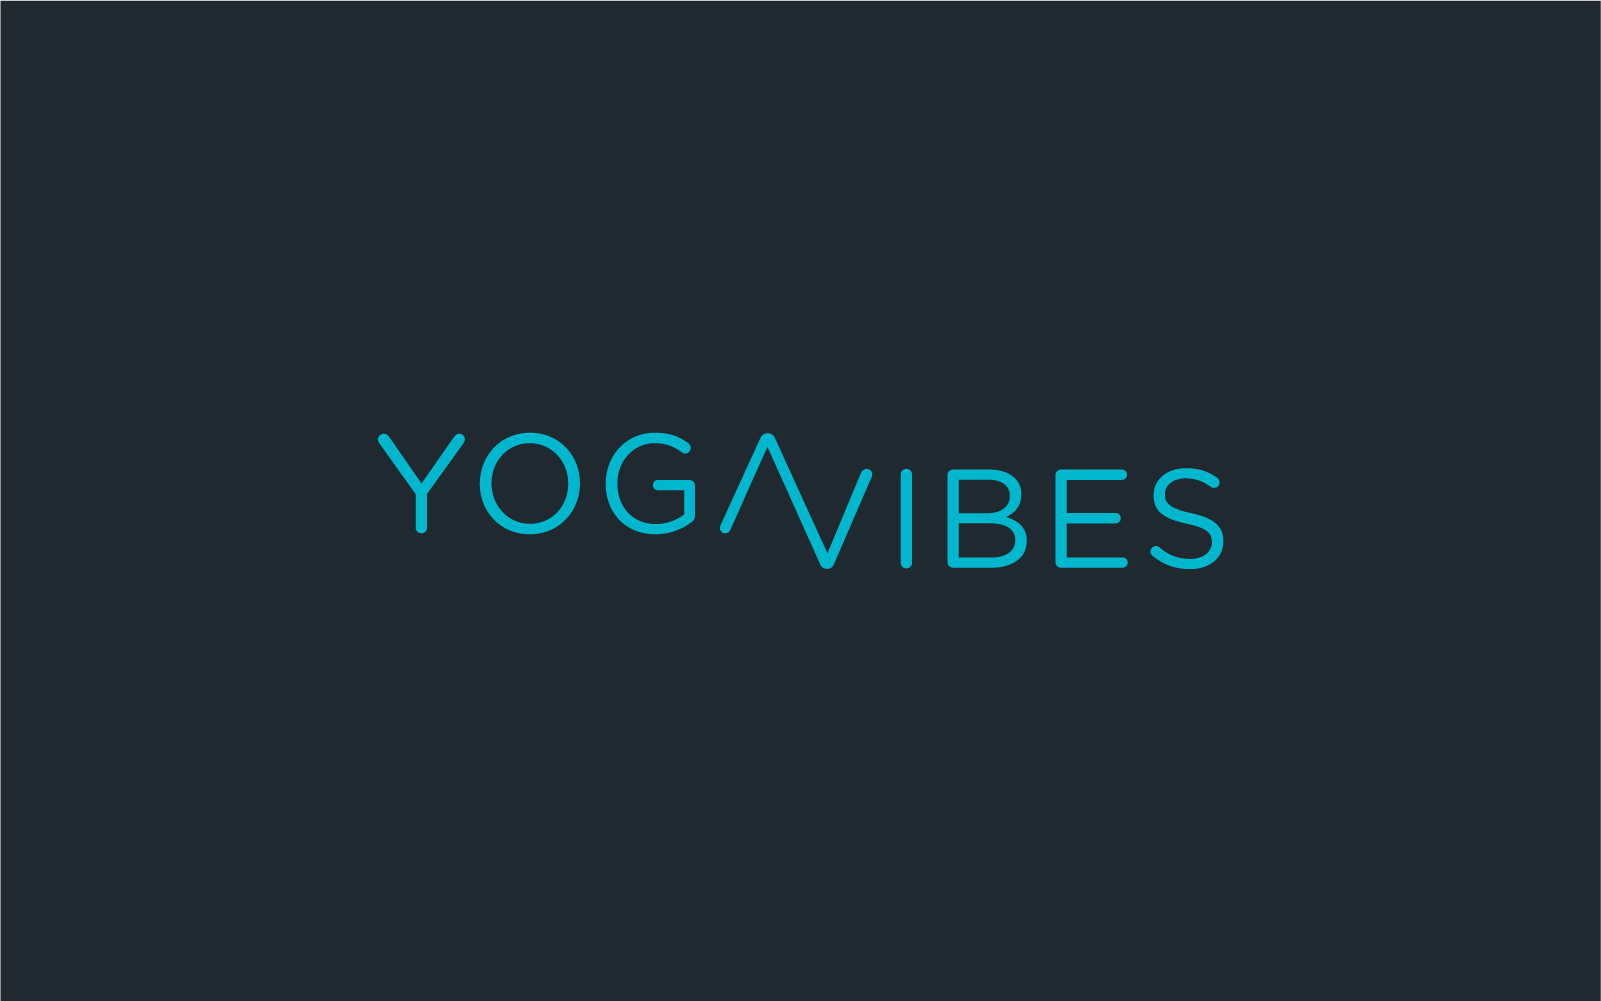 Logo designed for a yoga studio that uses vibration plates